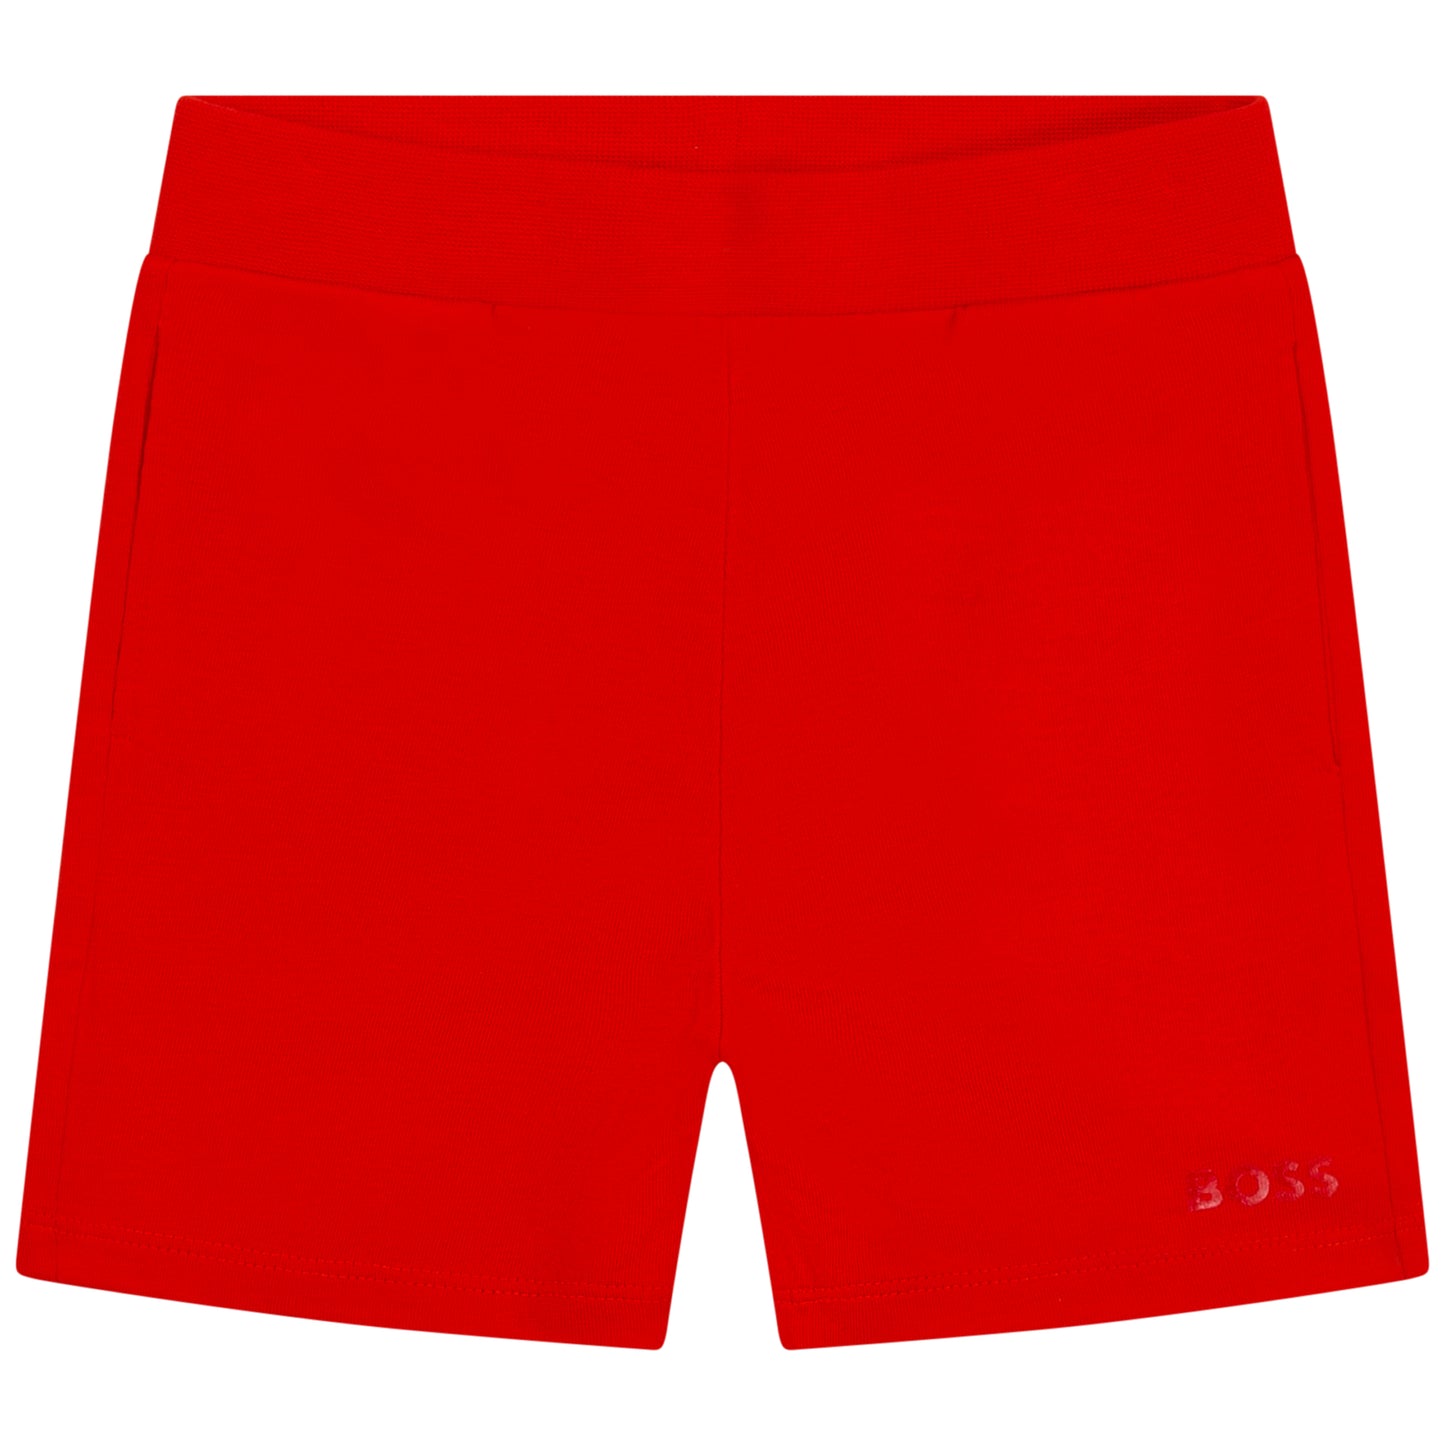 Hugo Boss Toddler T-Shirt & Short Set_ Bright Red J08058-992